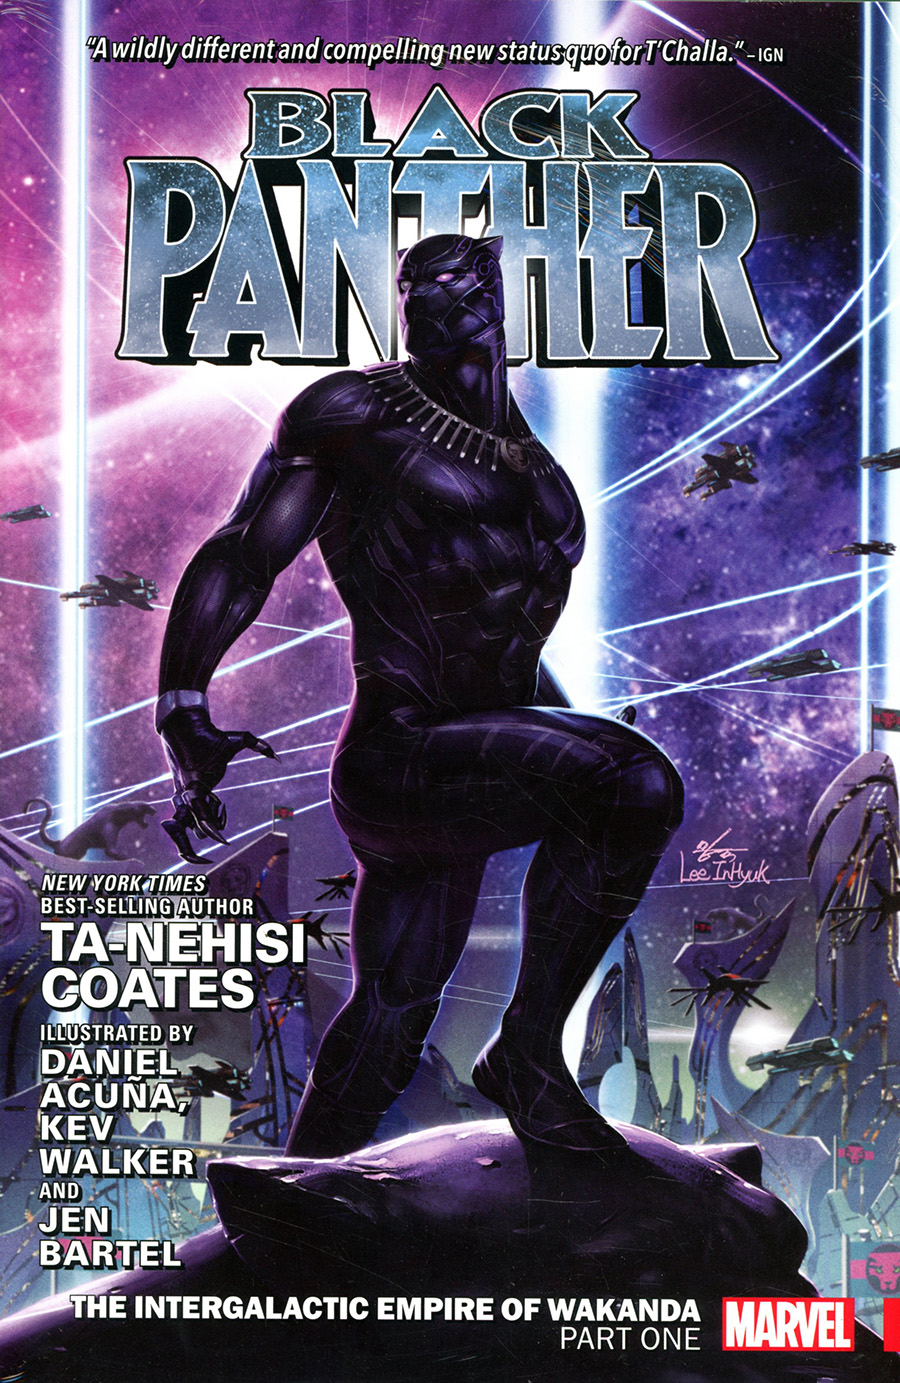 Black Panther (2016) Vol 3 Intergalactic Empire Wakanda Part 1 HC